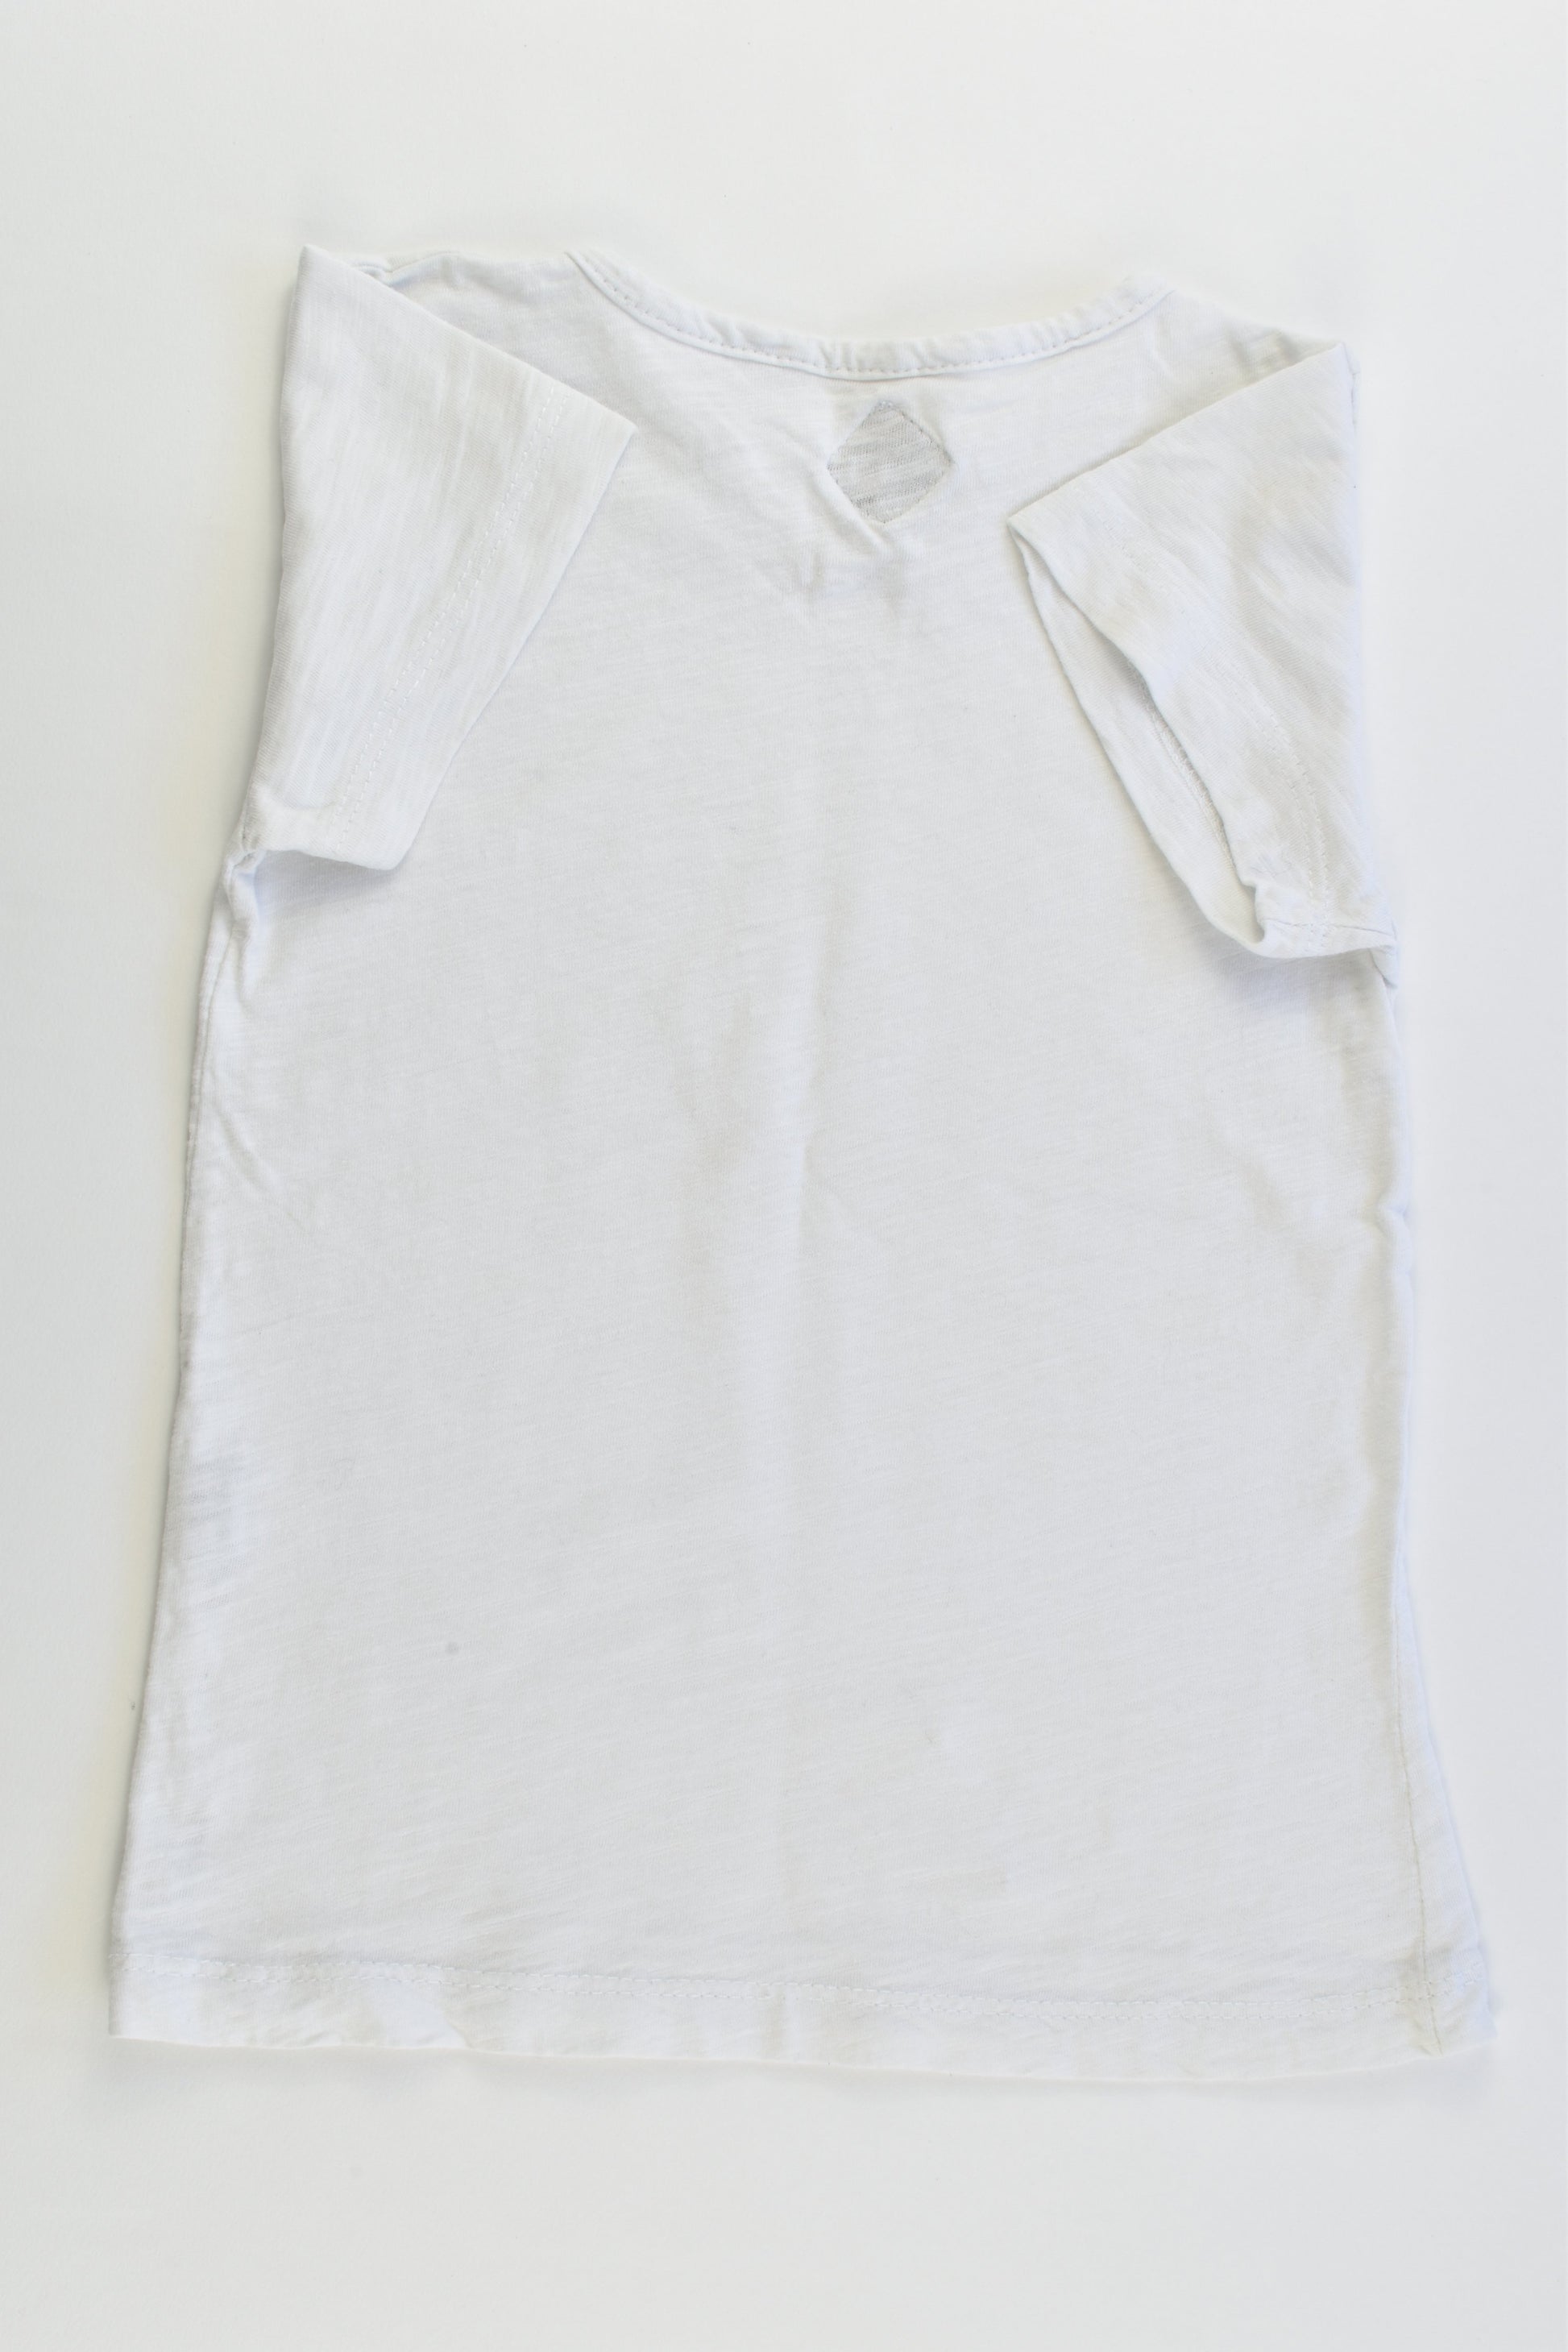 Blanc Du Nil (France) Size 2-3 T-shirt